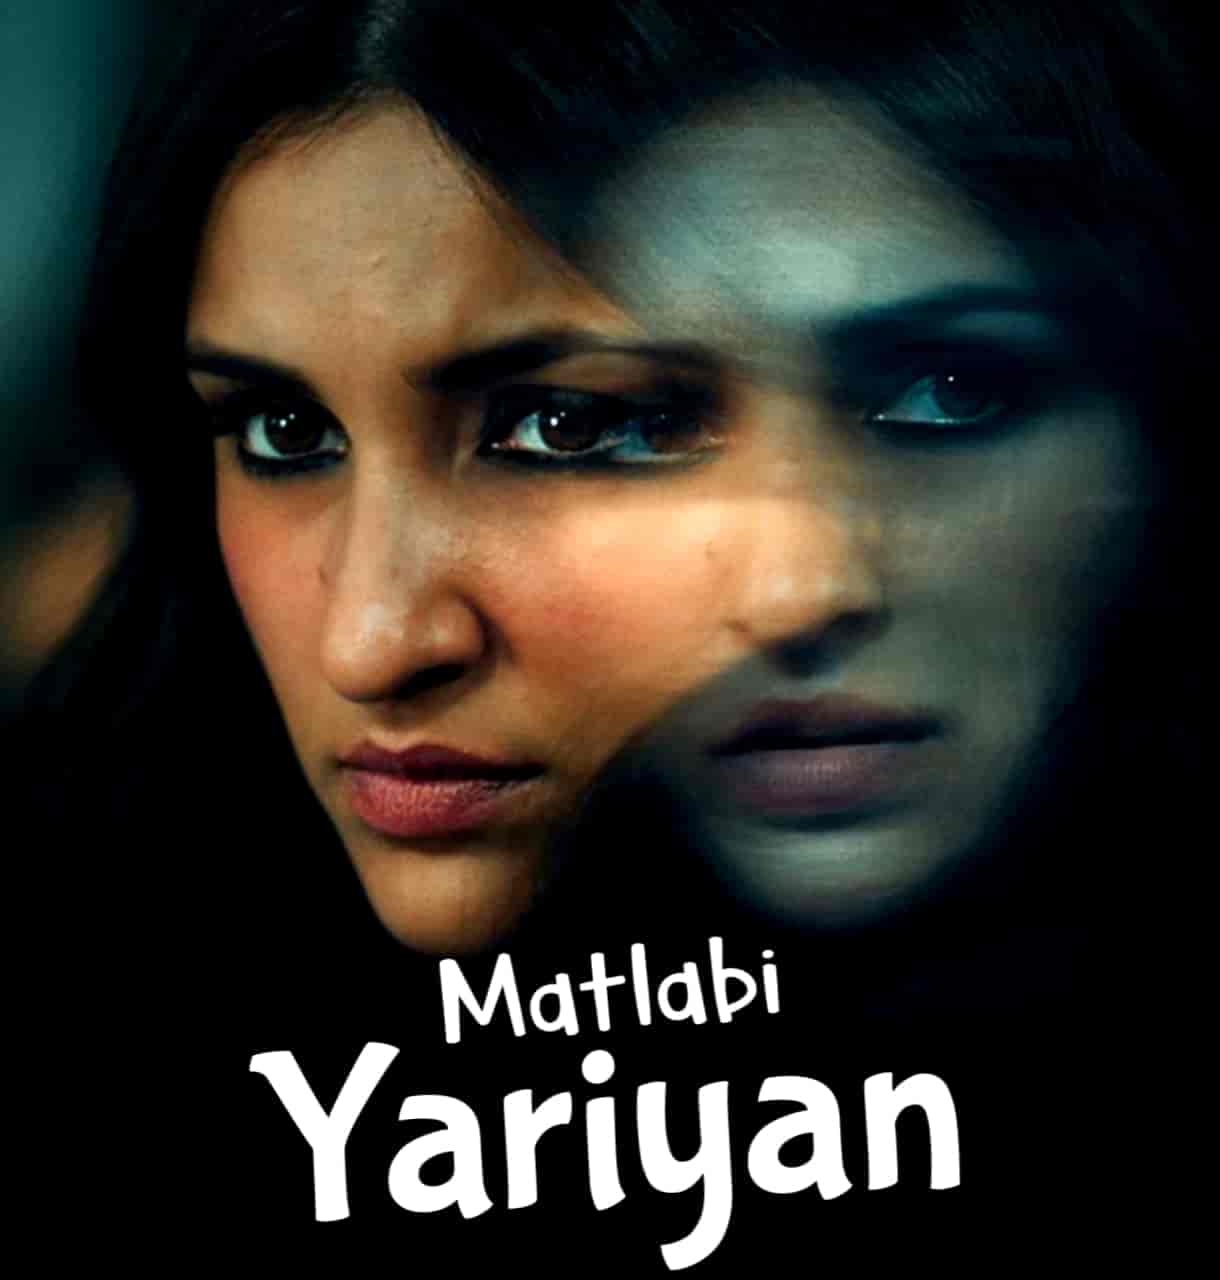 Matlabi Yariyan Hindi Song Image Features Parineeti Chopra